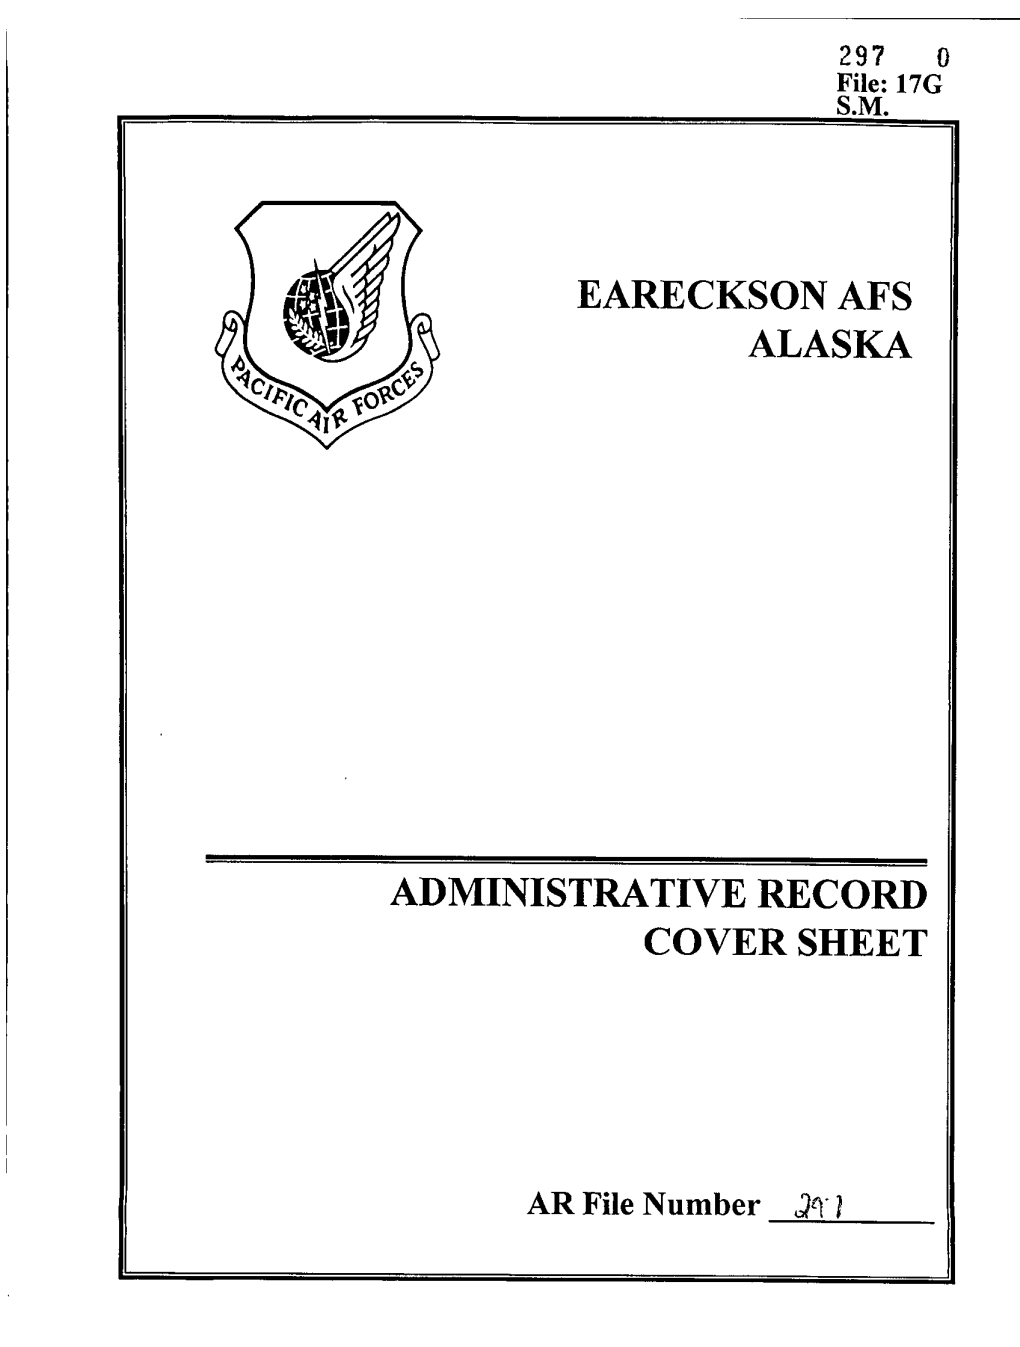 Eareckson Aps Alaska Administrative Record